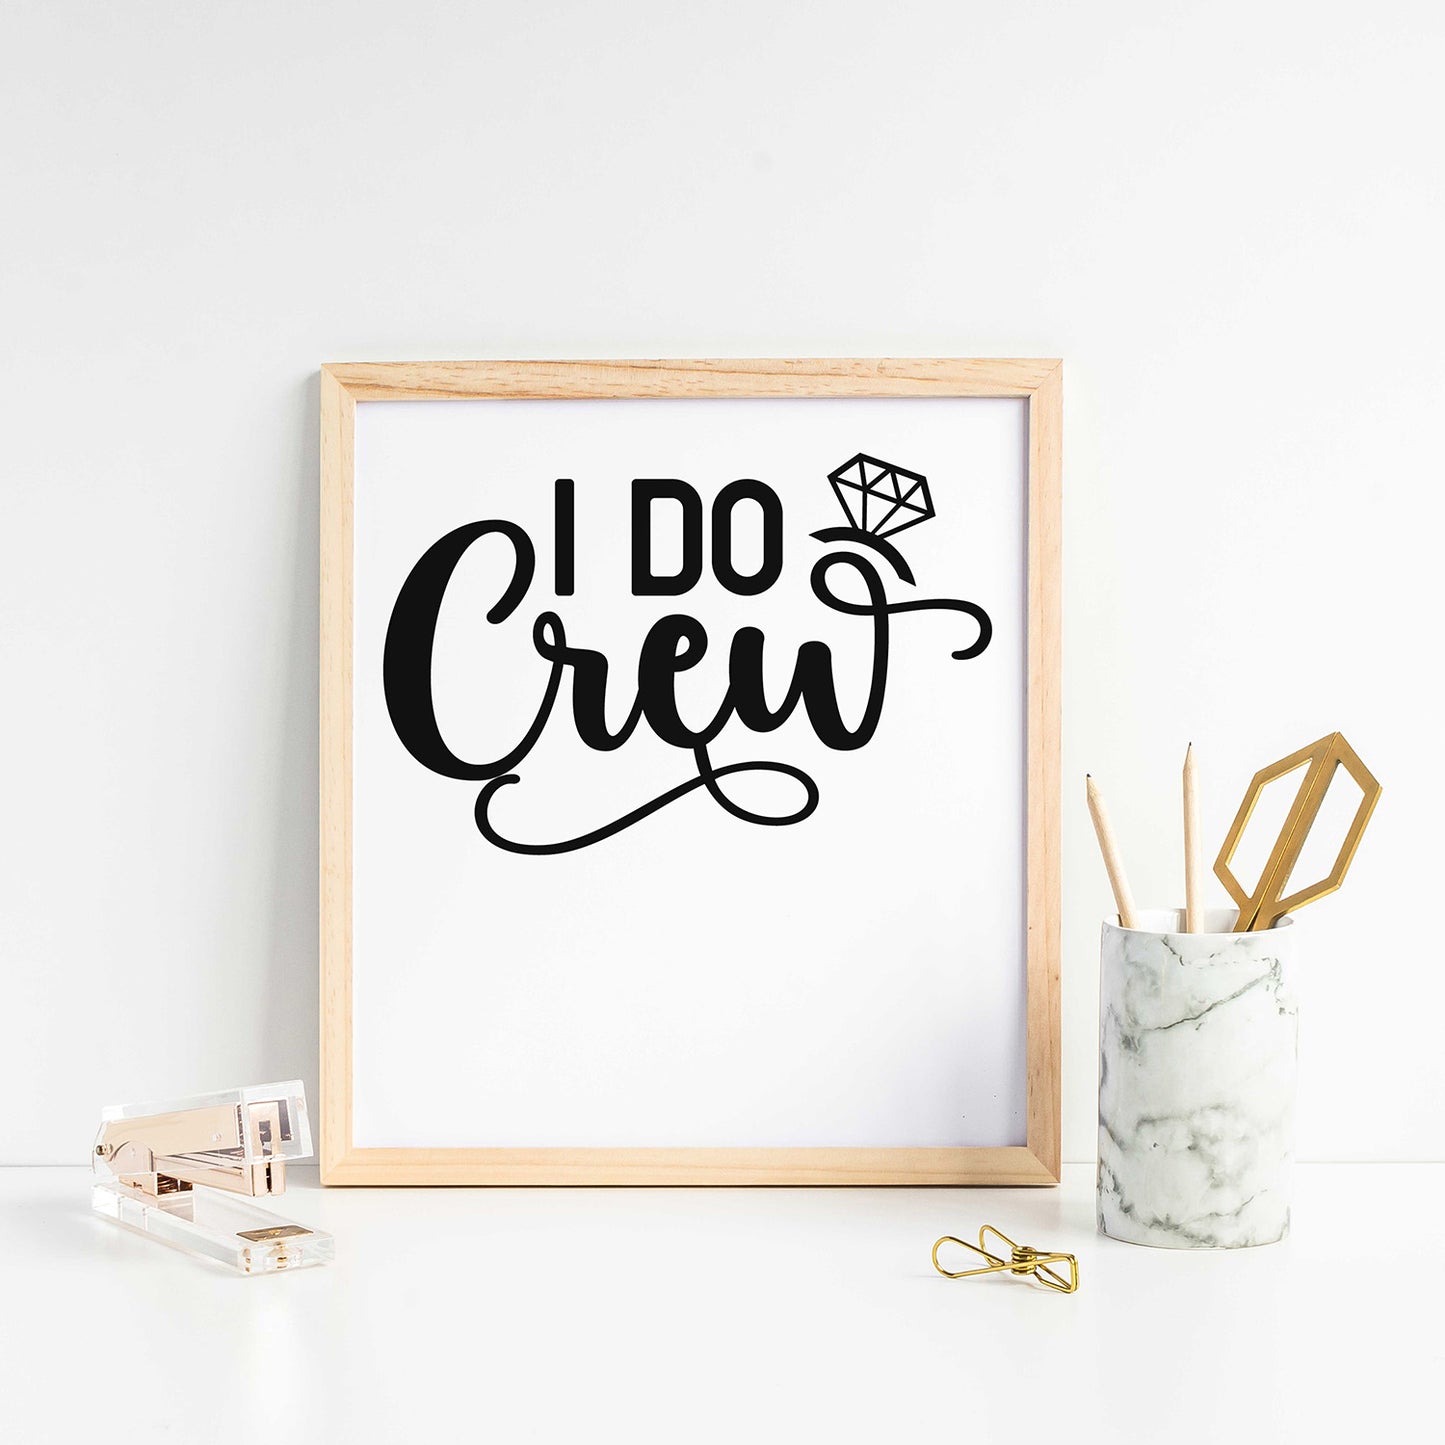 "I Do Crew" Graphic